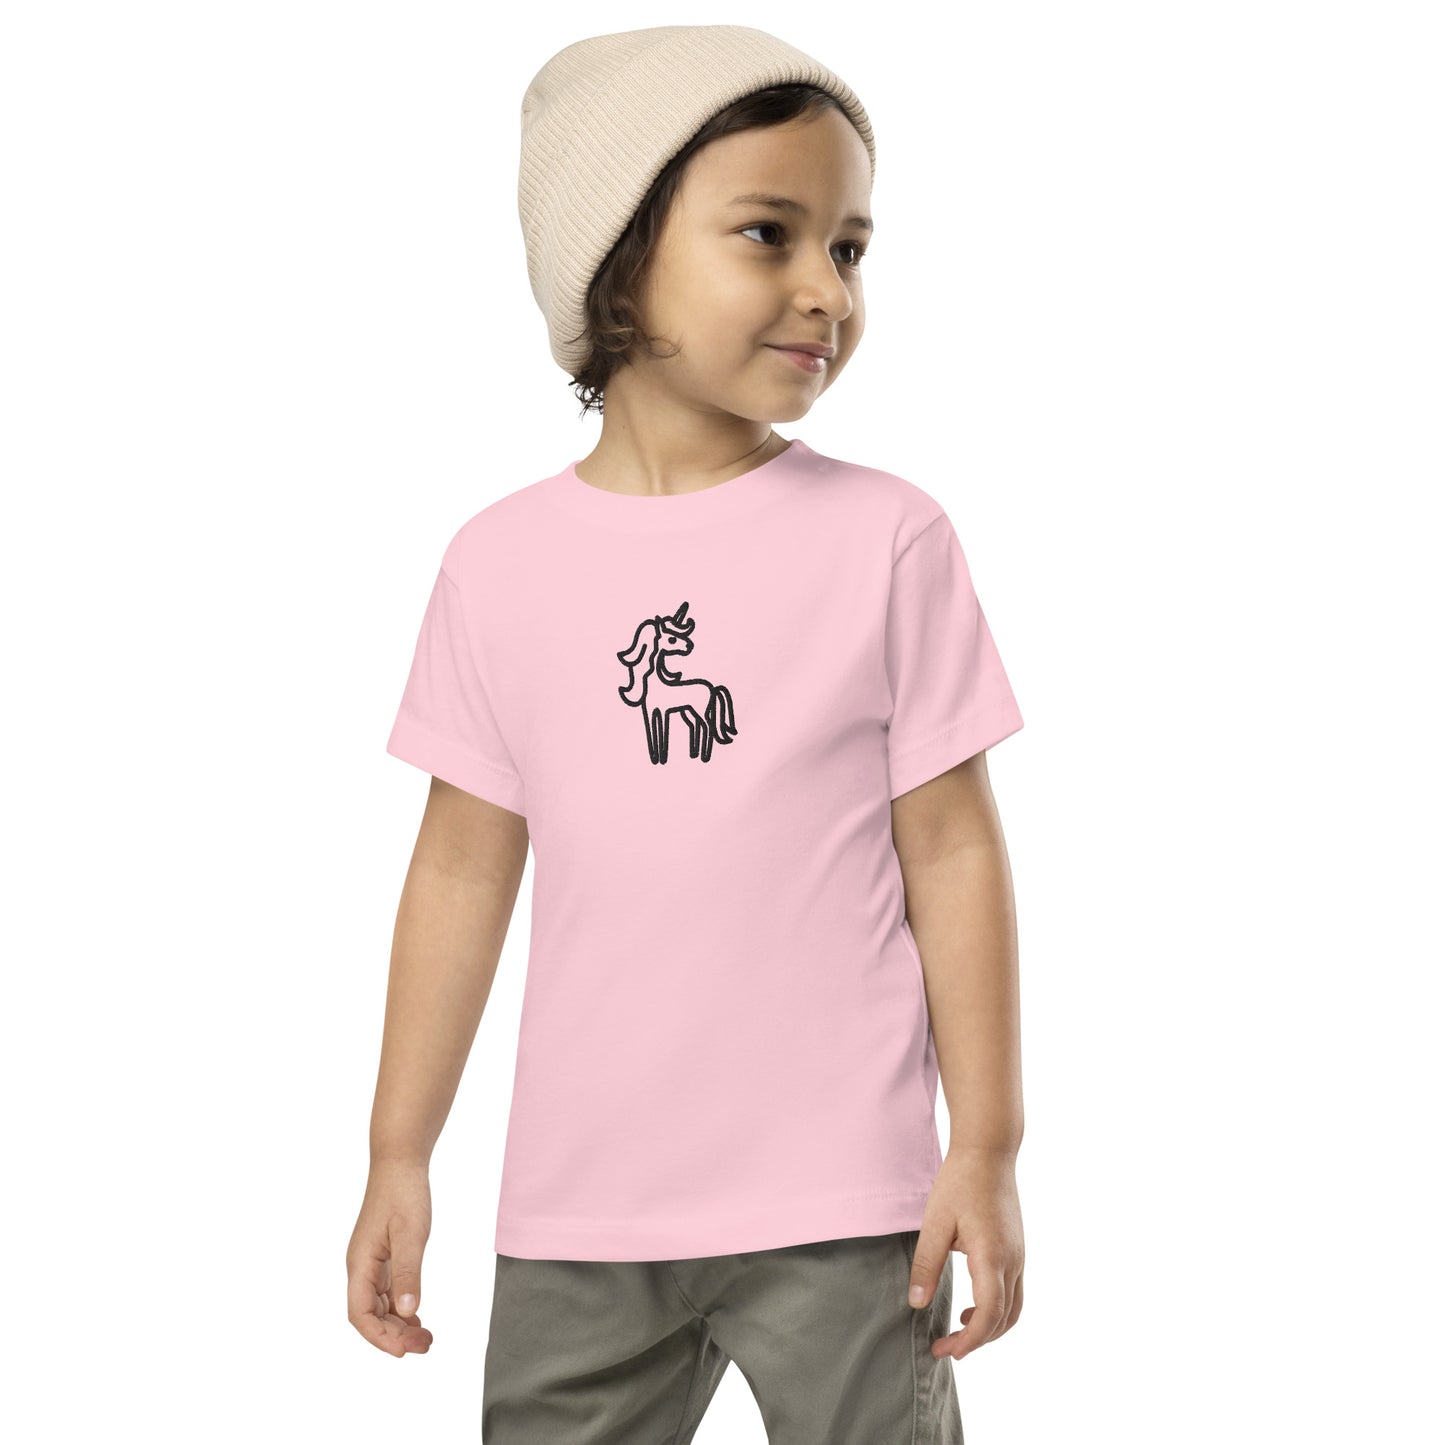 "Unicorn" children's t-shirt